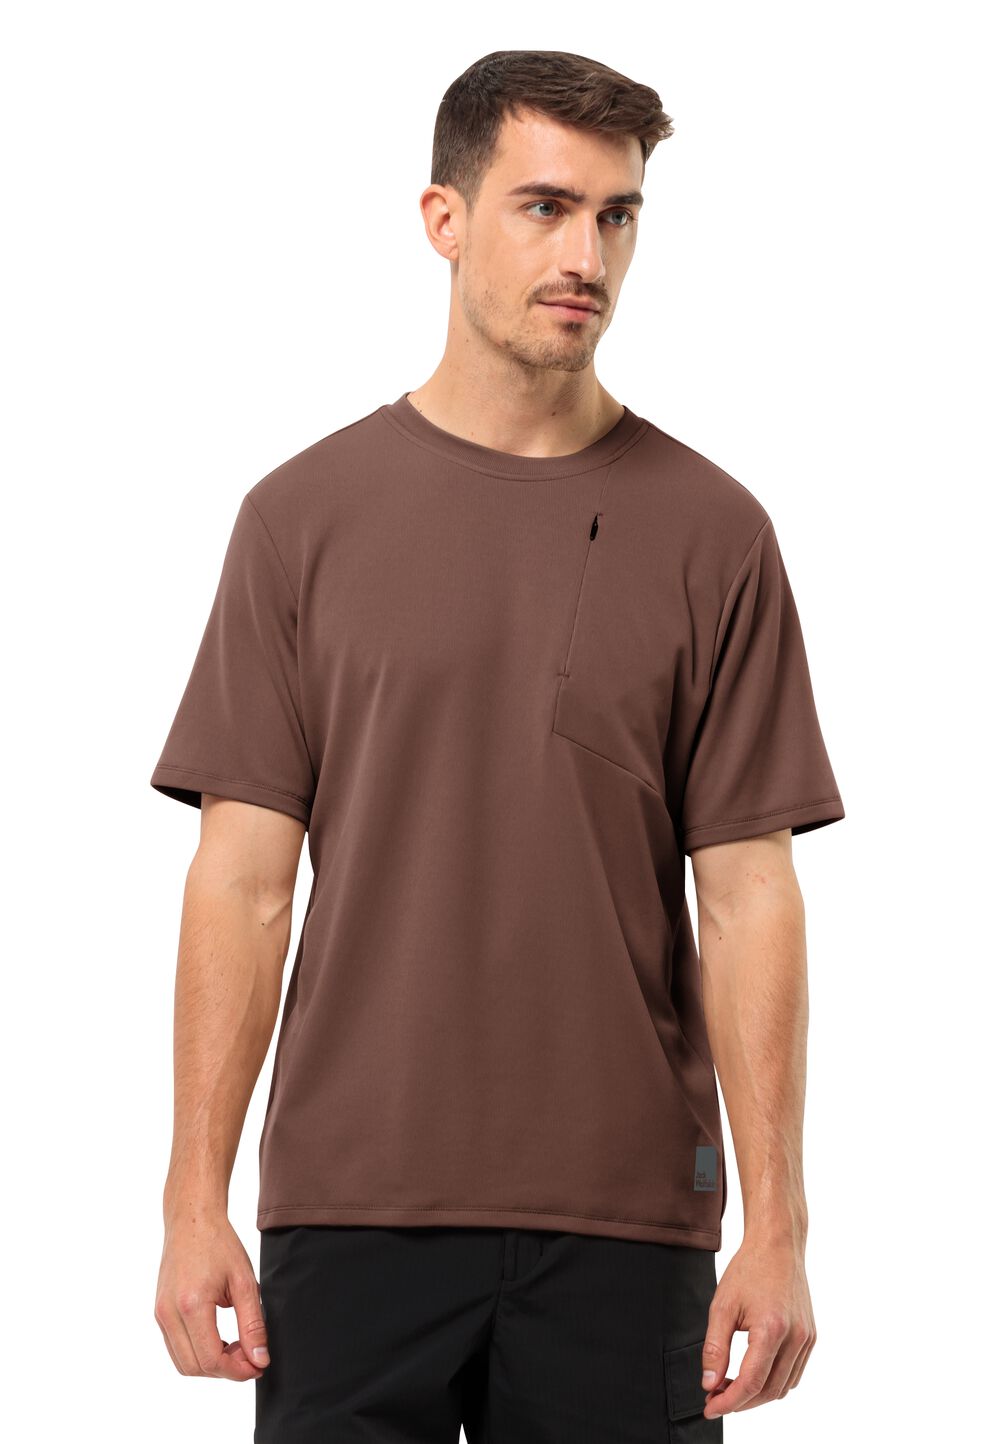 Jack Wolfskin Bike Commute T-Shirt Men Functioneel shirt Heren S bruin dark rust